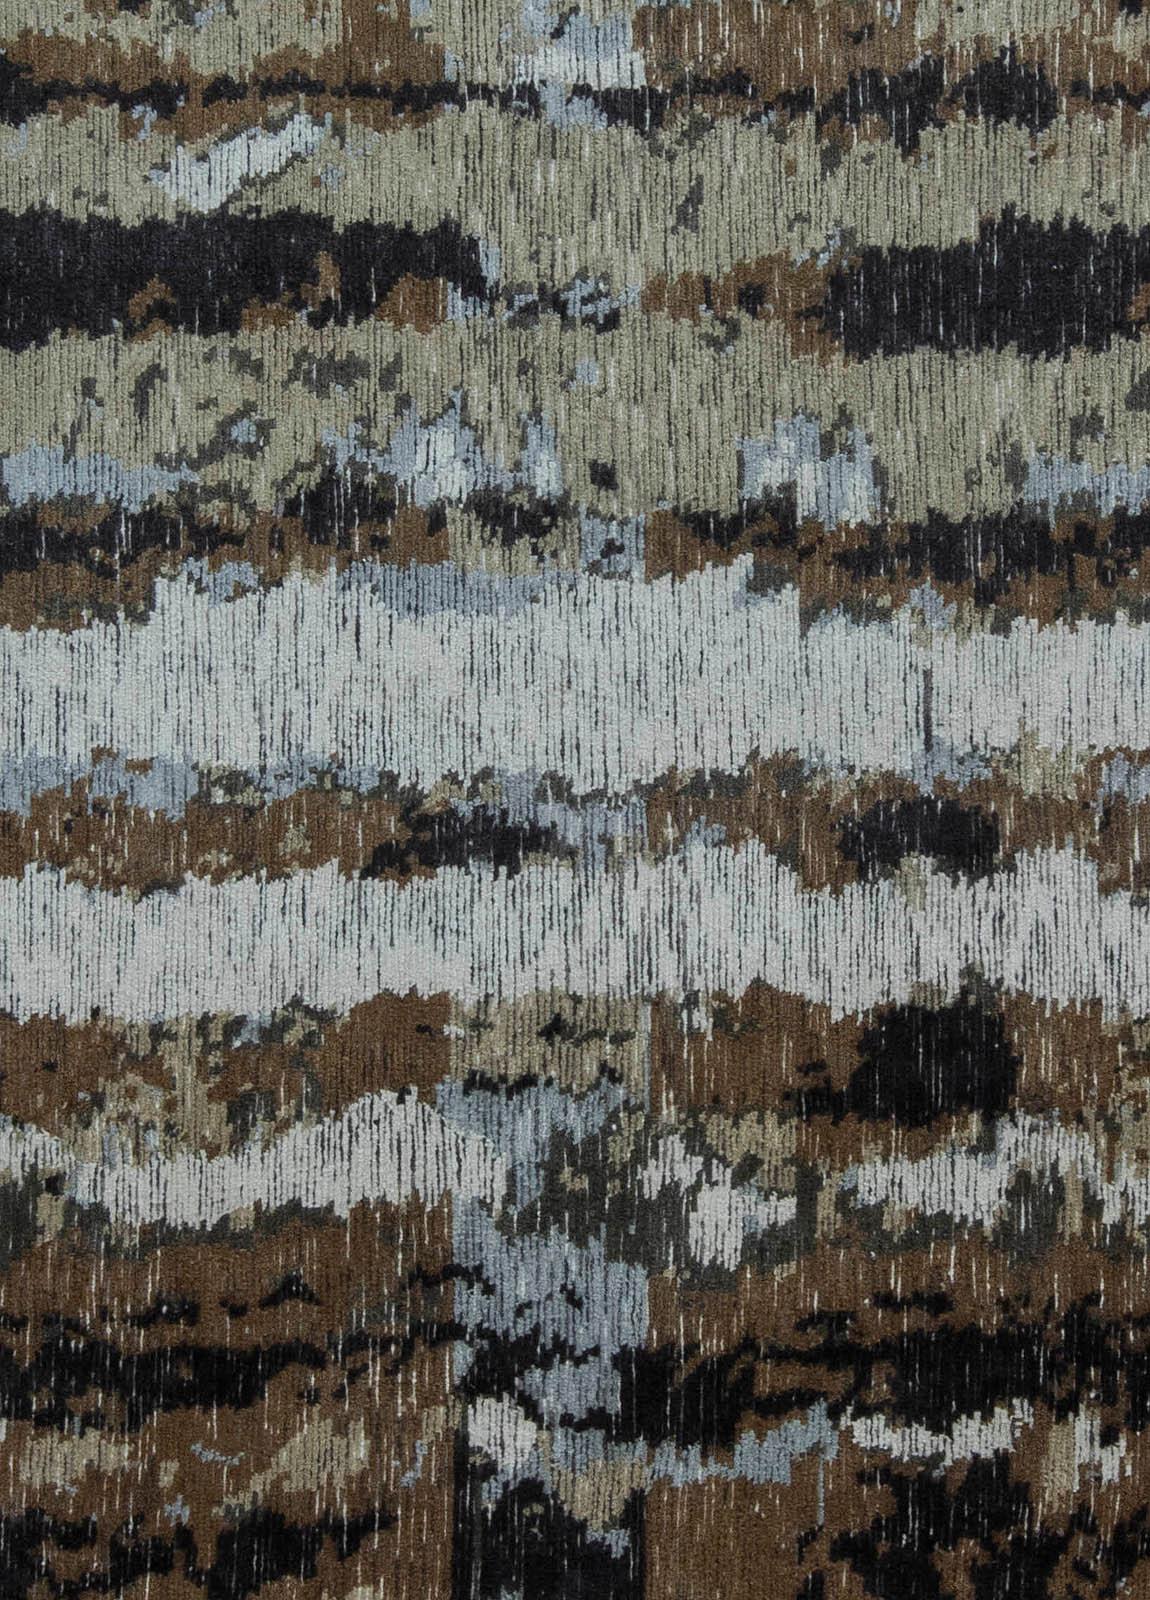 Contemporary abstract Tibetan handmade wool and silk rug by Doris Leslie Blau.
Size: 12'5